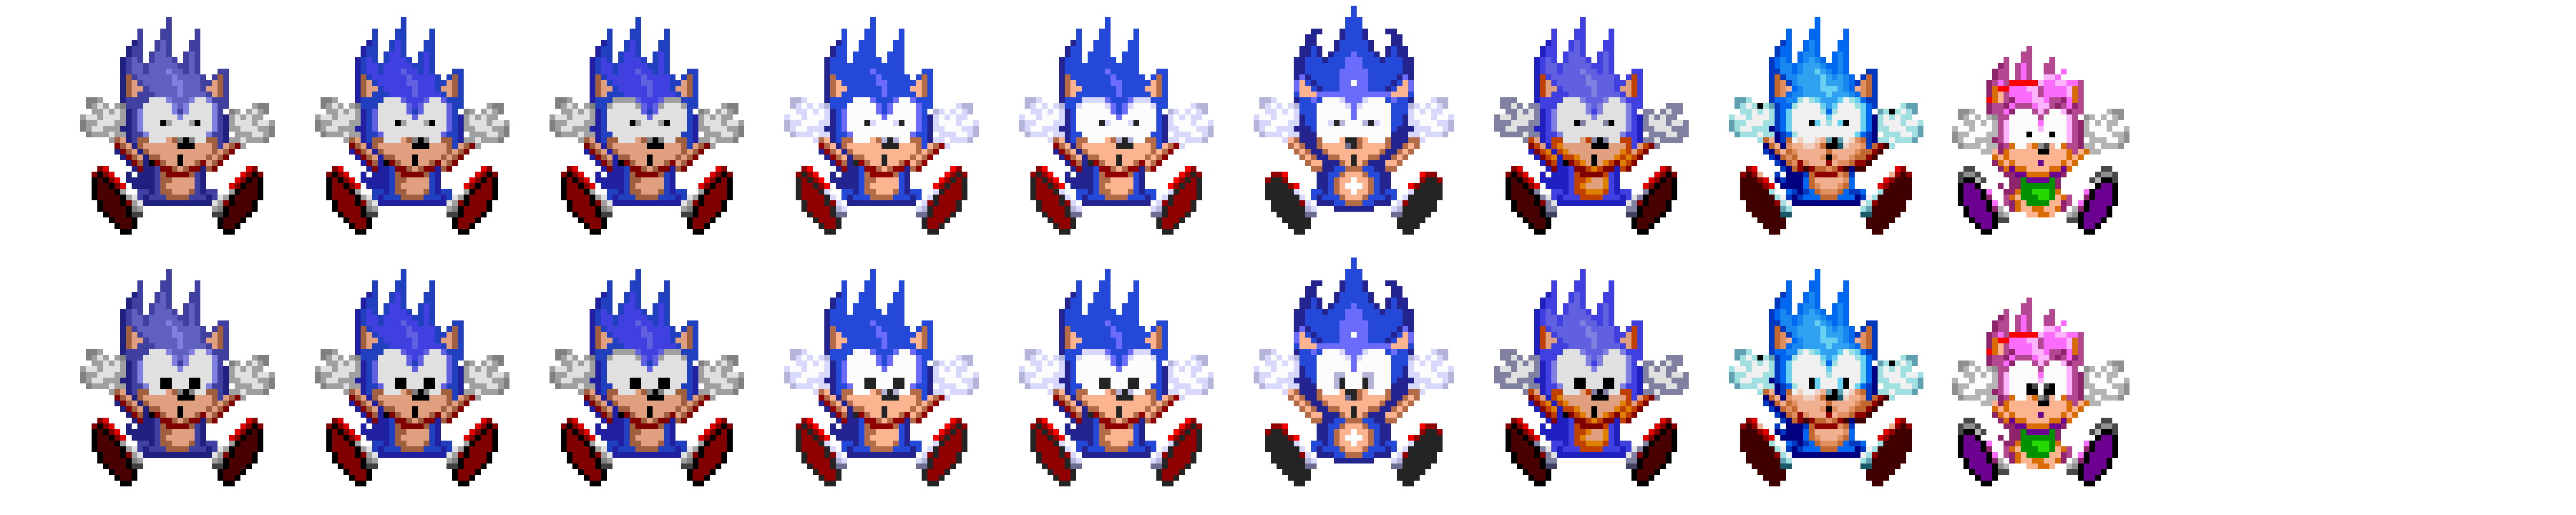 Sonic 2D Drawn Sprites Compilation - GIF - Imgur